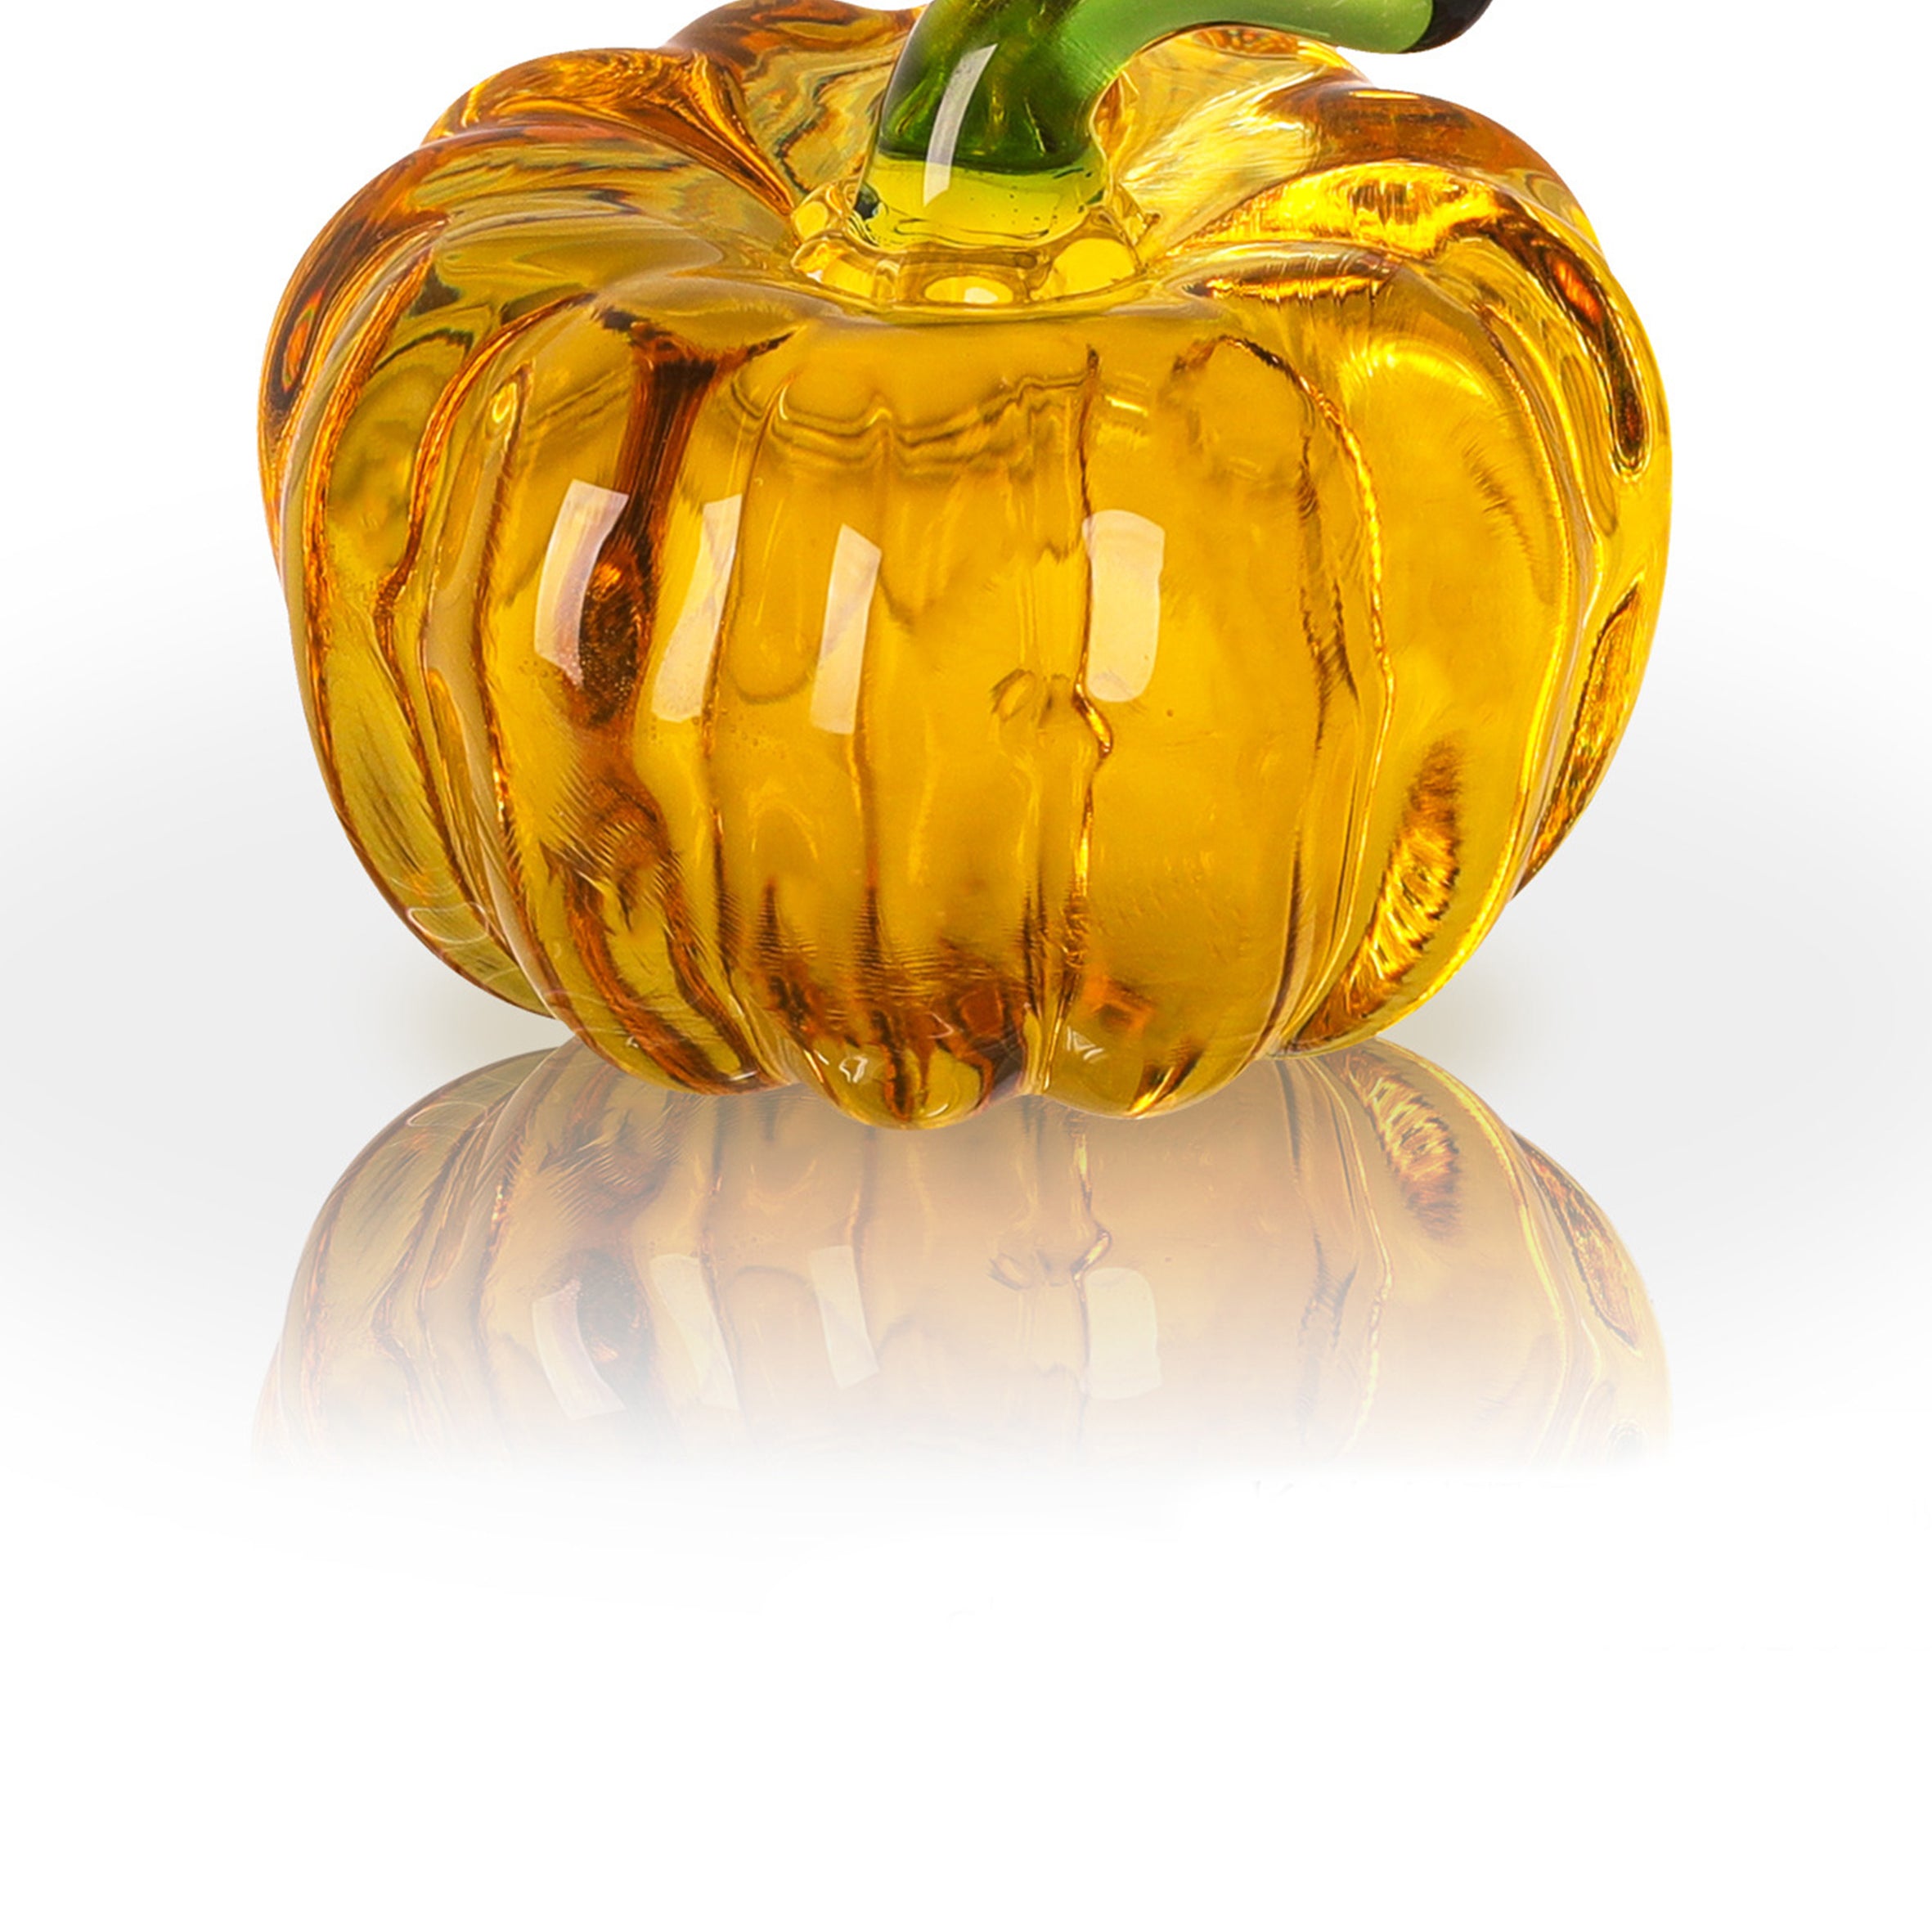 Pumpkin Glass Decorative Gifts W1823